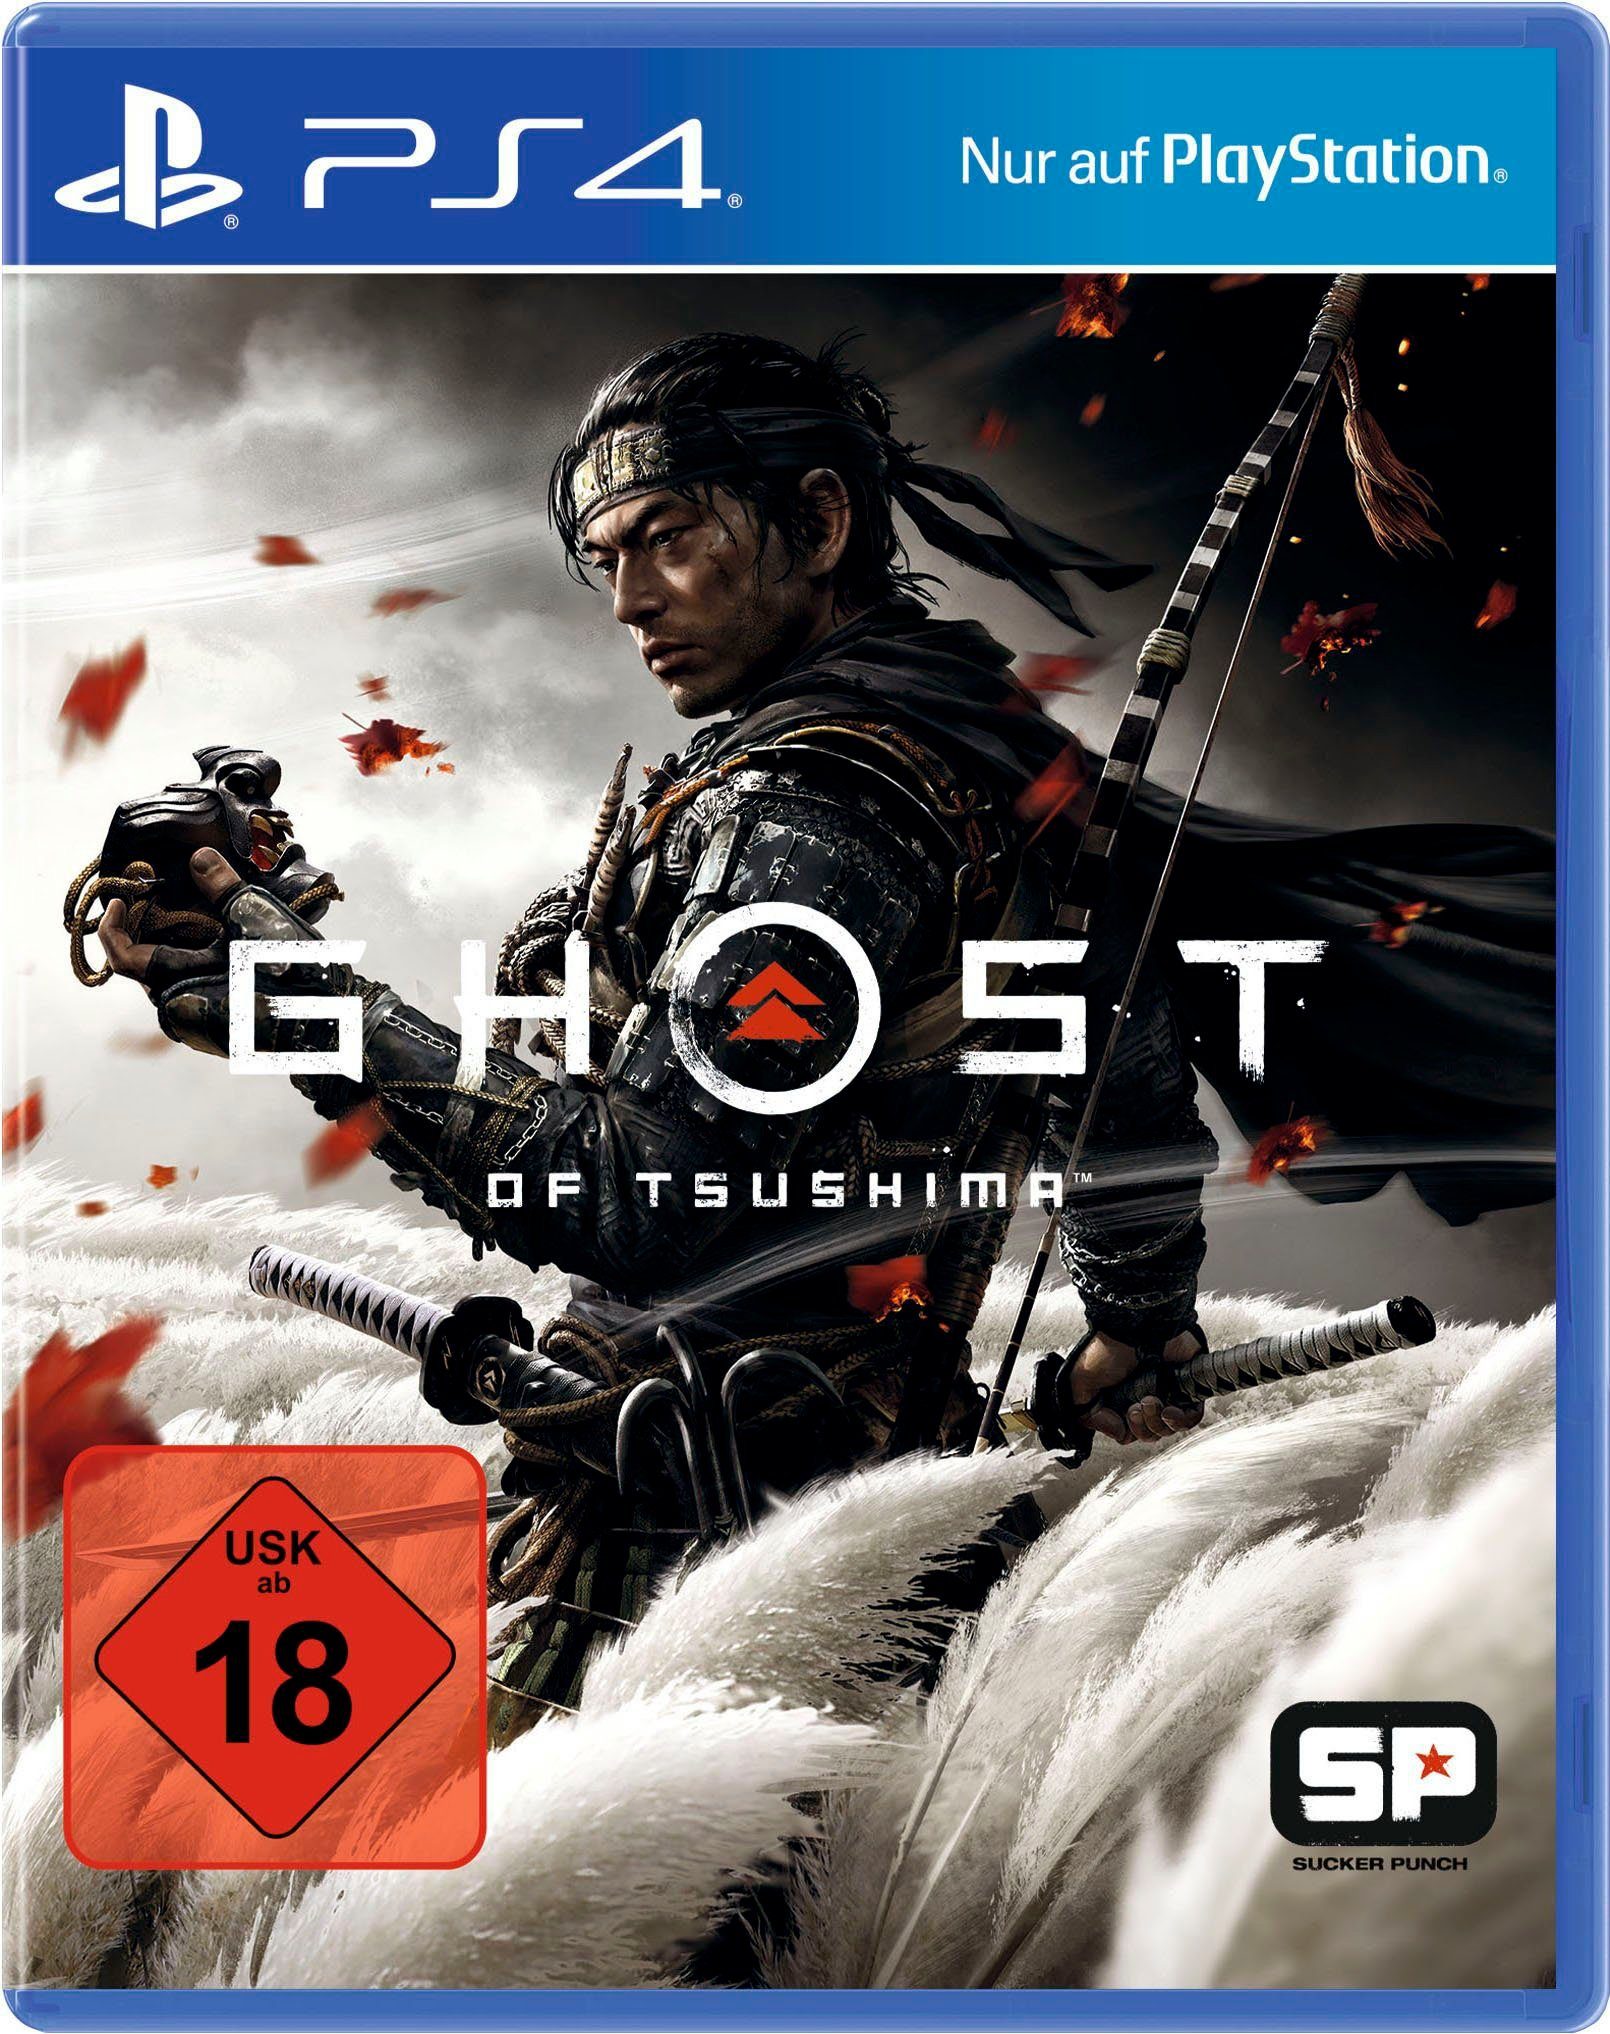 inkl. 500GB, PlayStation Tsushima of Ghost Slim, 4